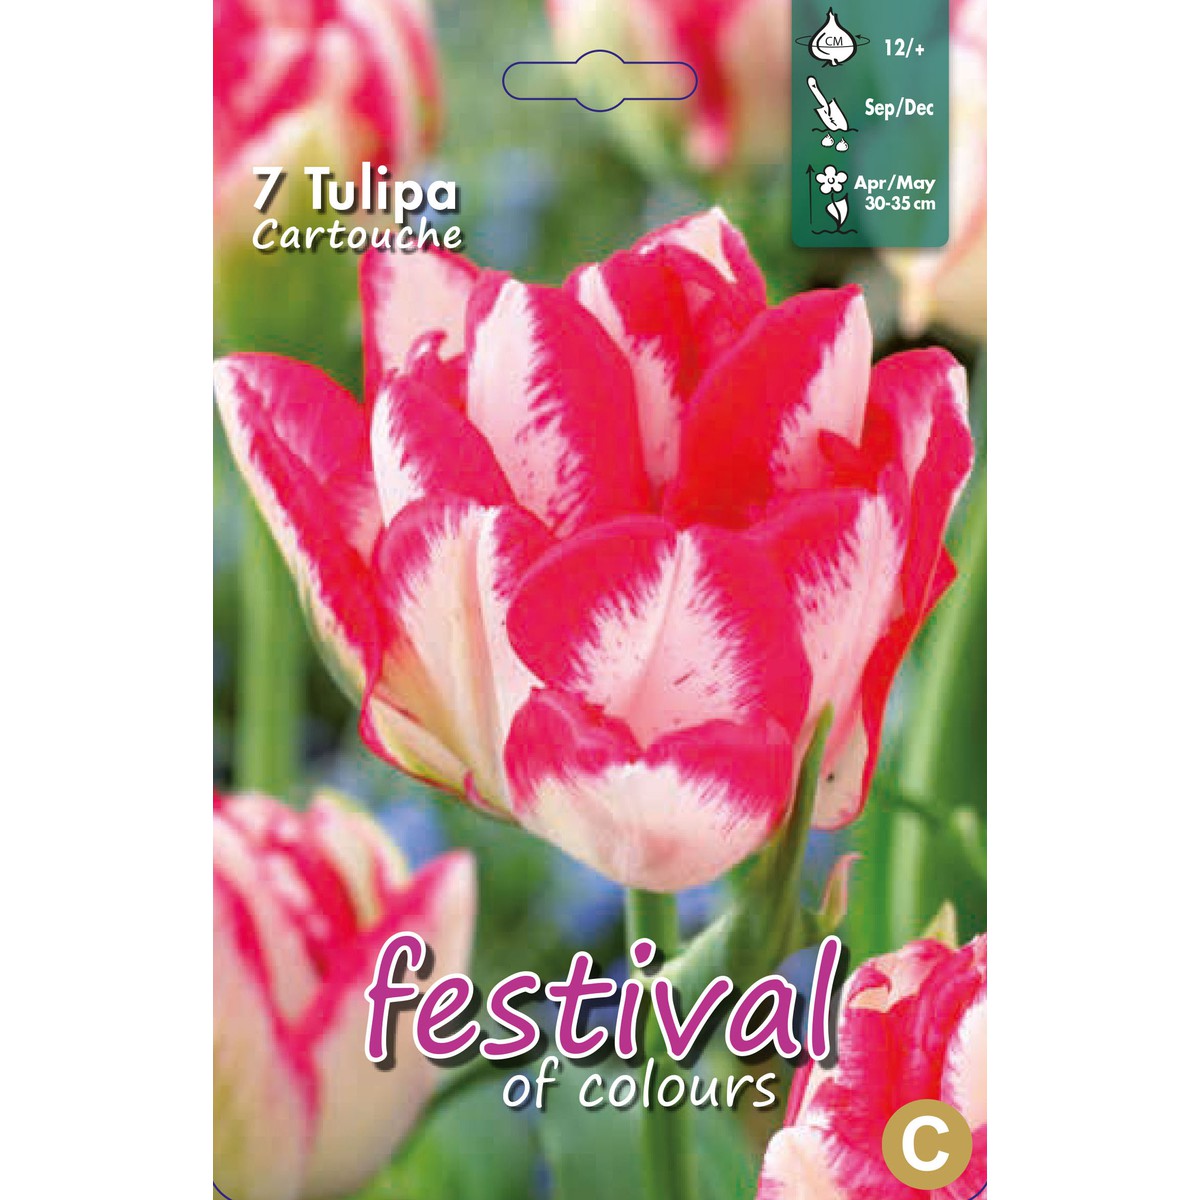   Tulipes 'Cartouche'  10 pcs 12/+